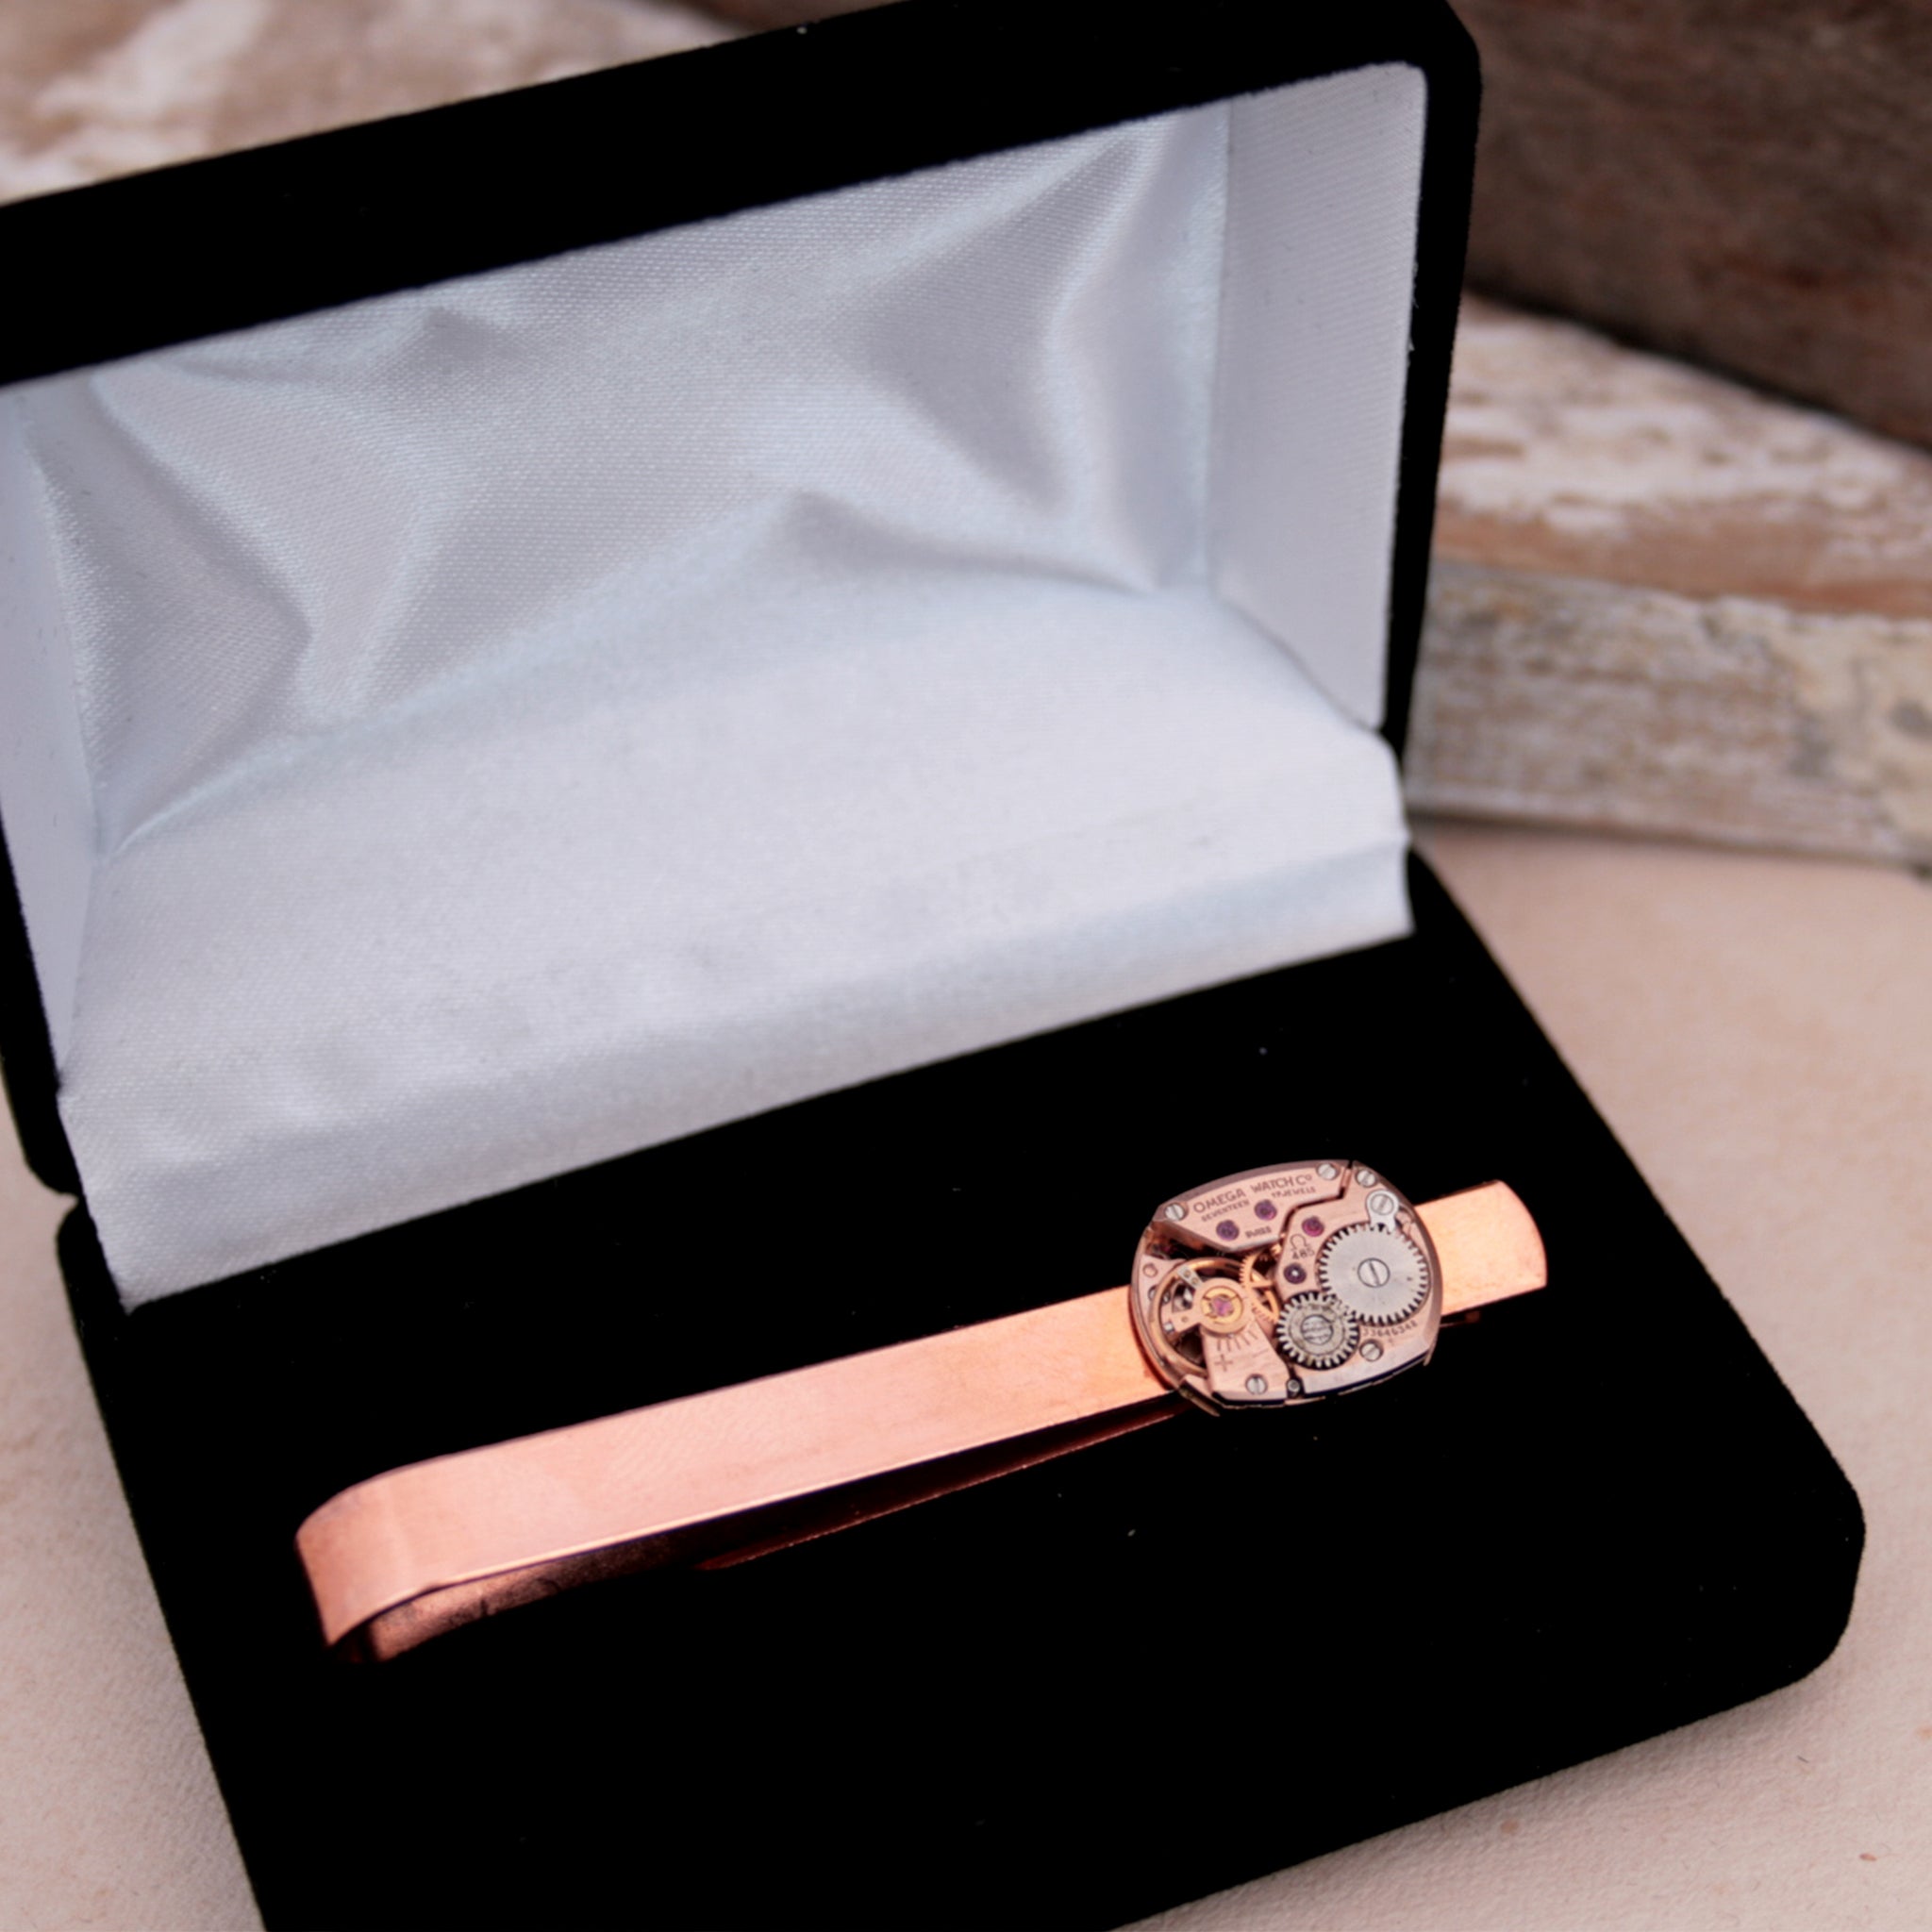 Omega Watch Copper Tie Clip